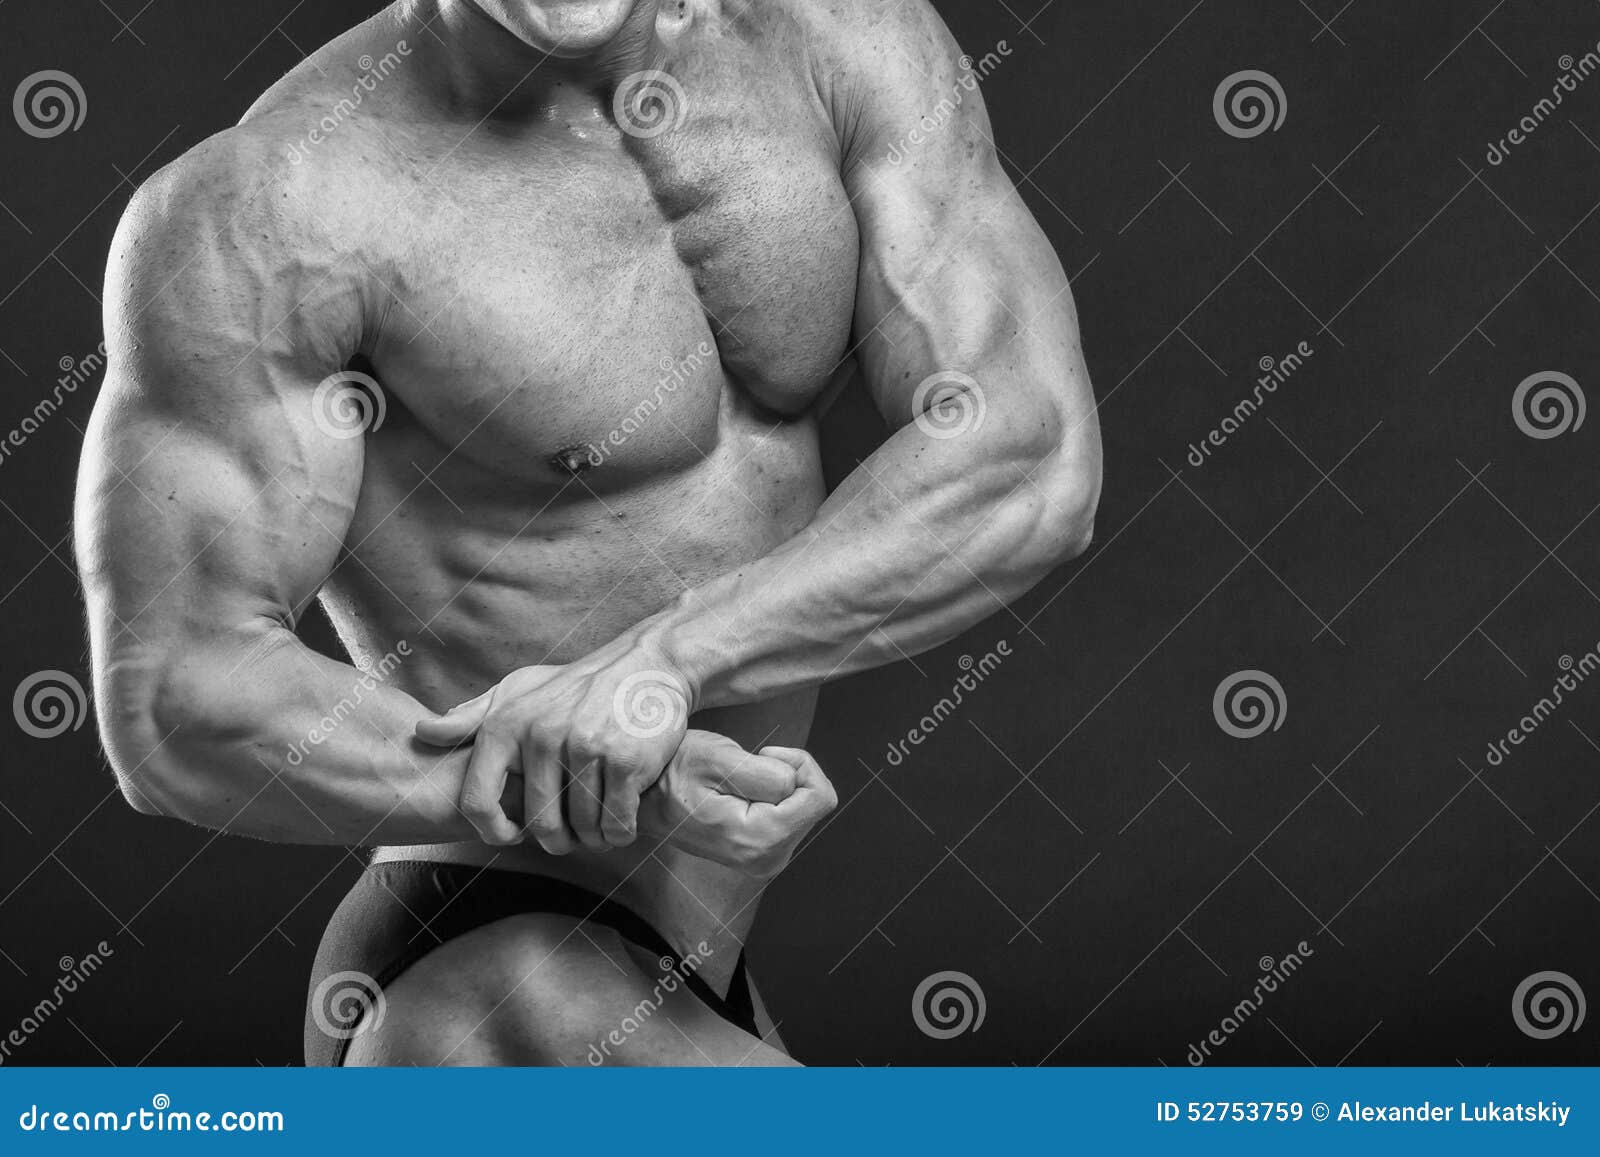 Bodybuilder stock image. Image of bodybuilder, active - 52753759